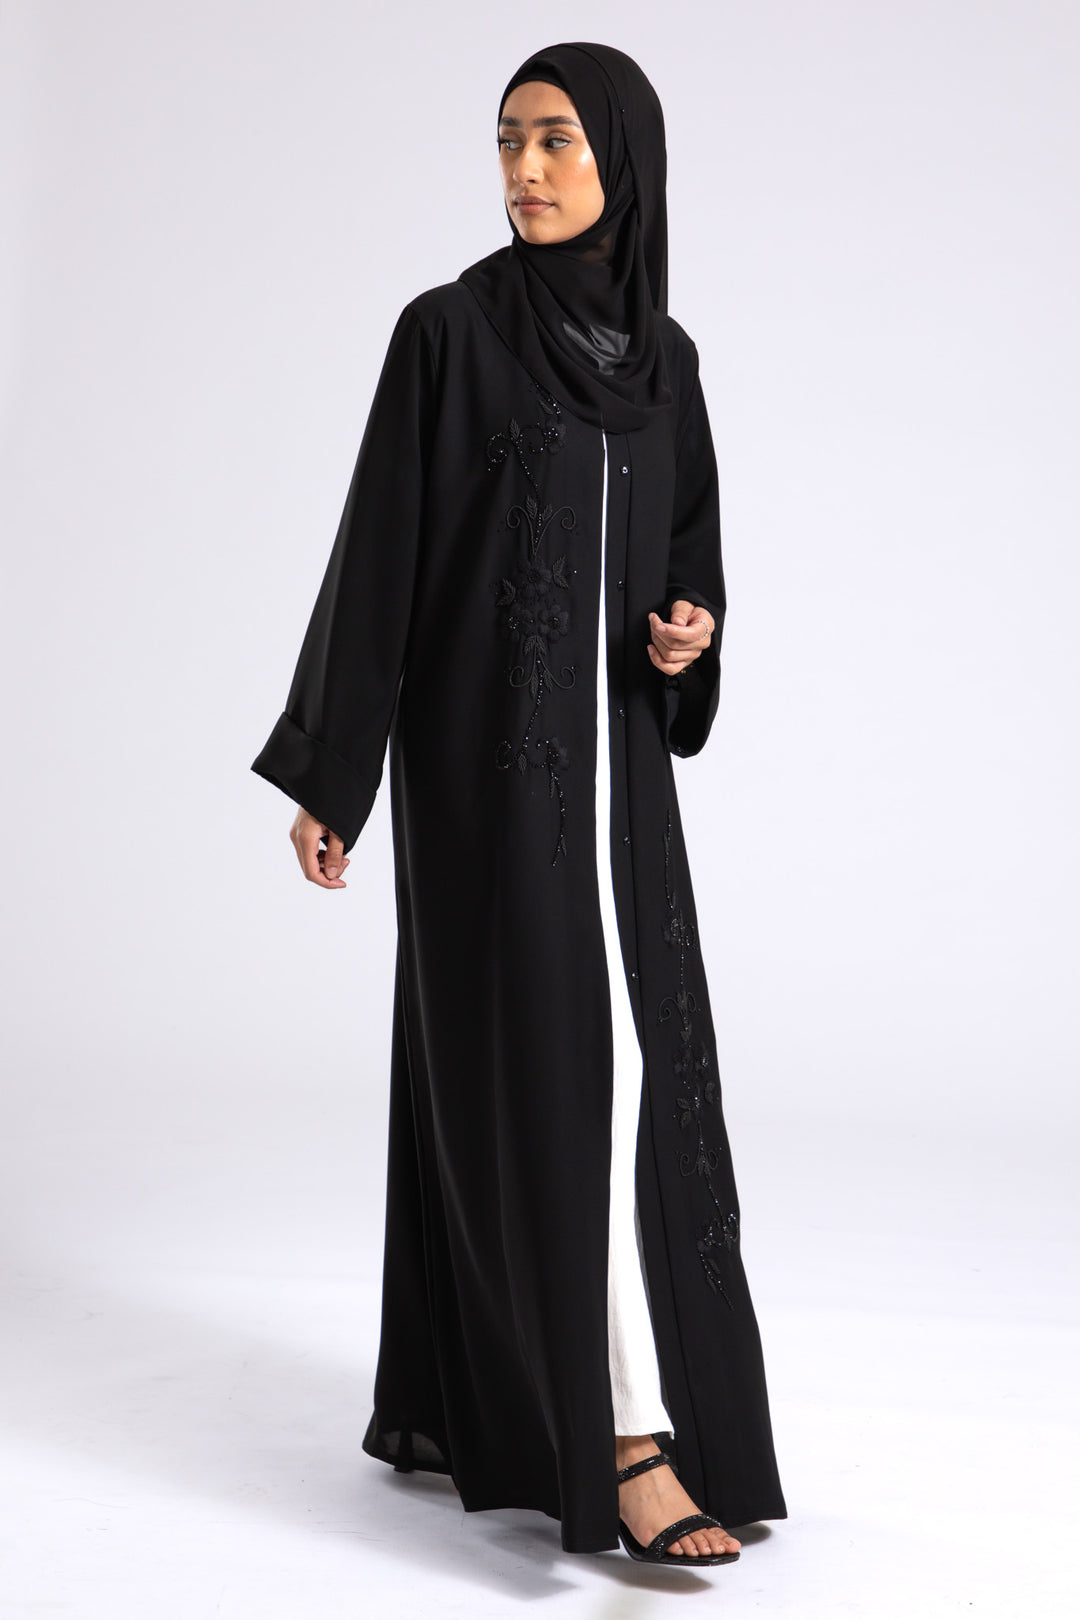 Whispering Threads Black Embroidered Abaya